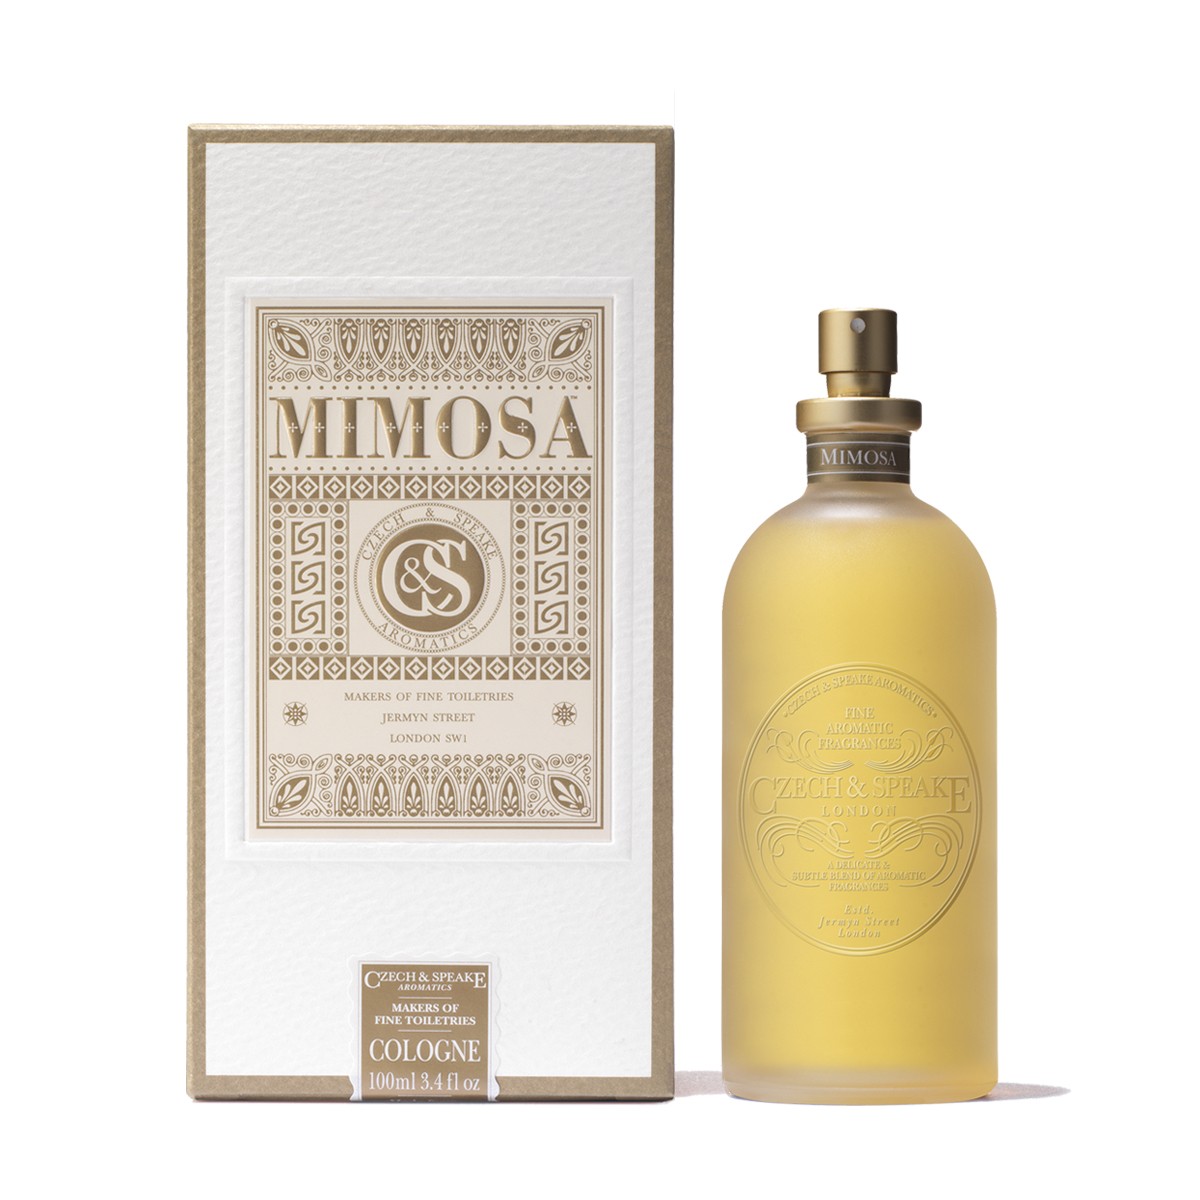 Frankincense and Myrrh Bath Oil 50ml - Czech & Speake Fragrance